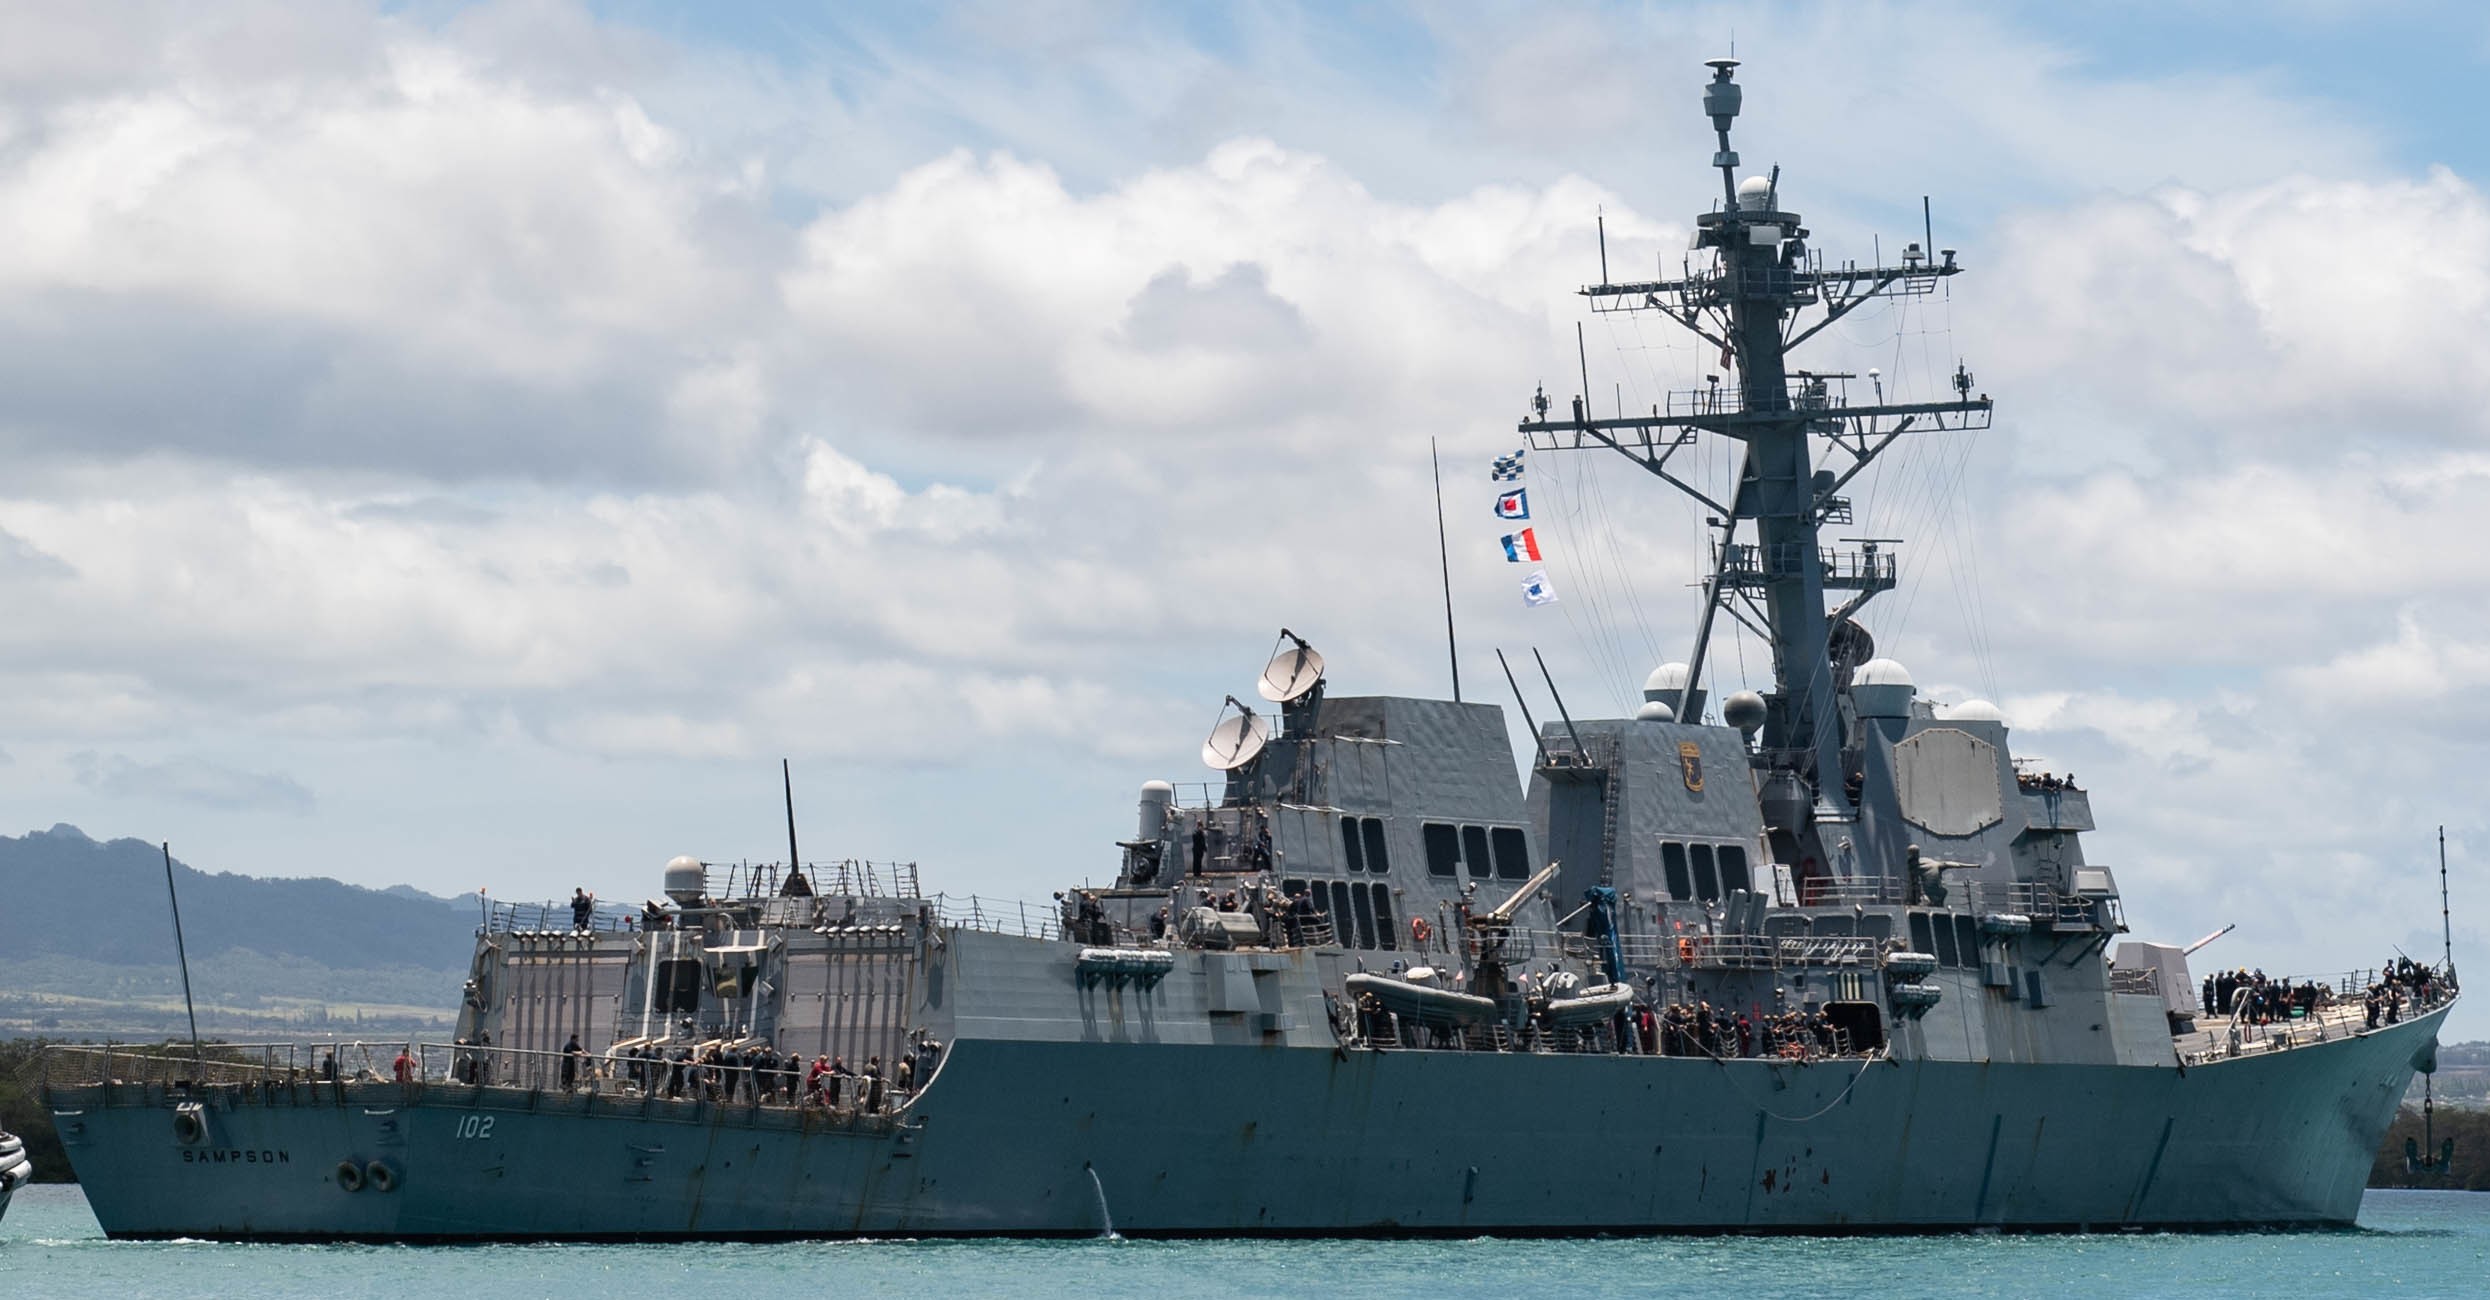 ddg-102 uss sampson arleigh burke class guided missile destroyer aegis us navy pearl harbor hawaii 98